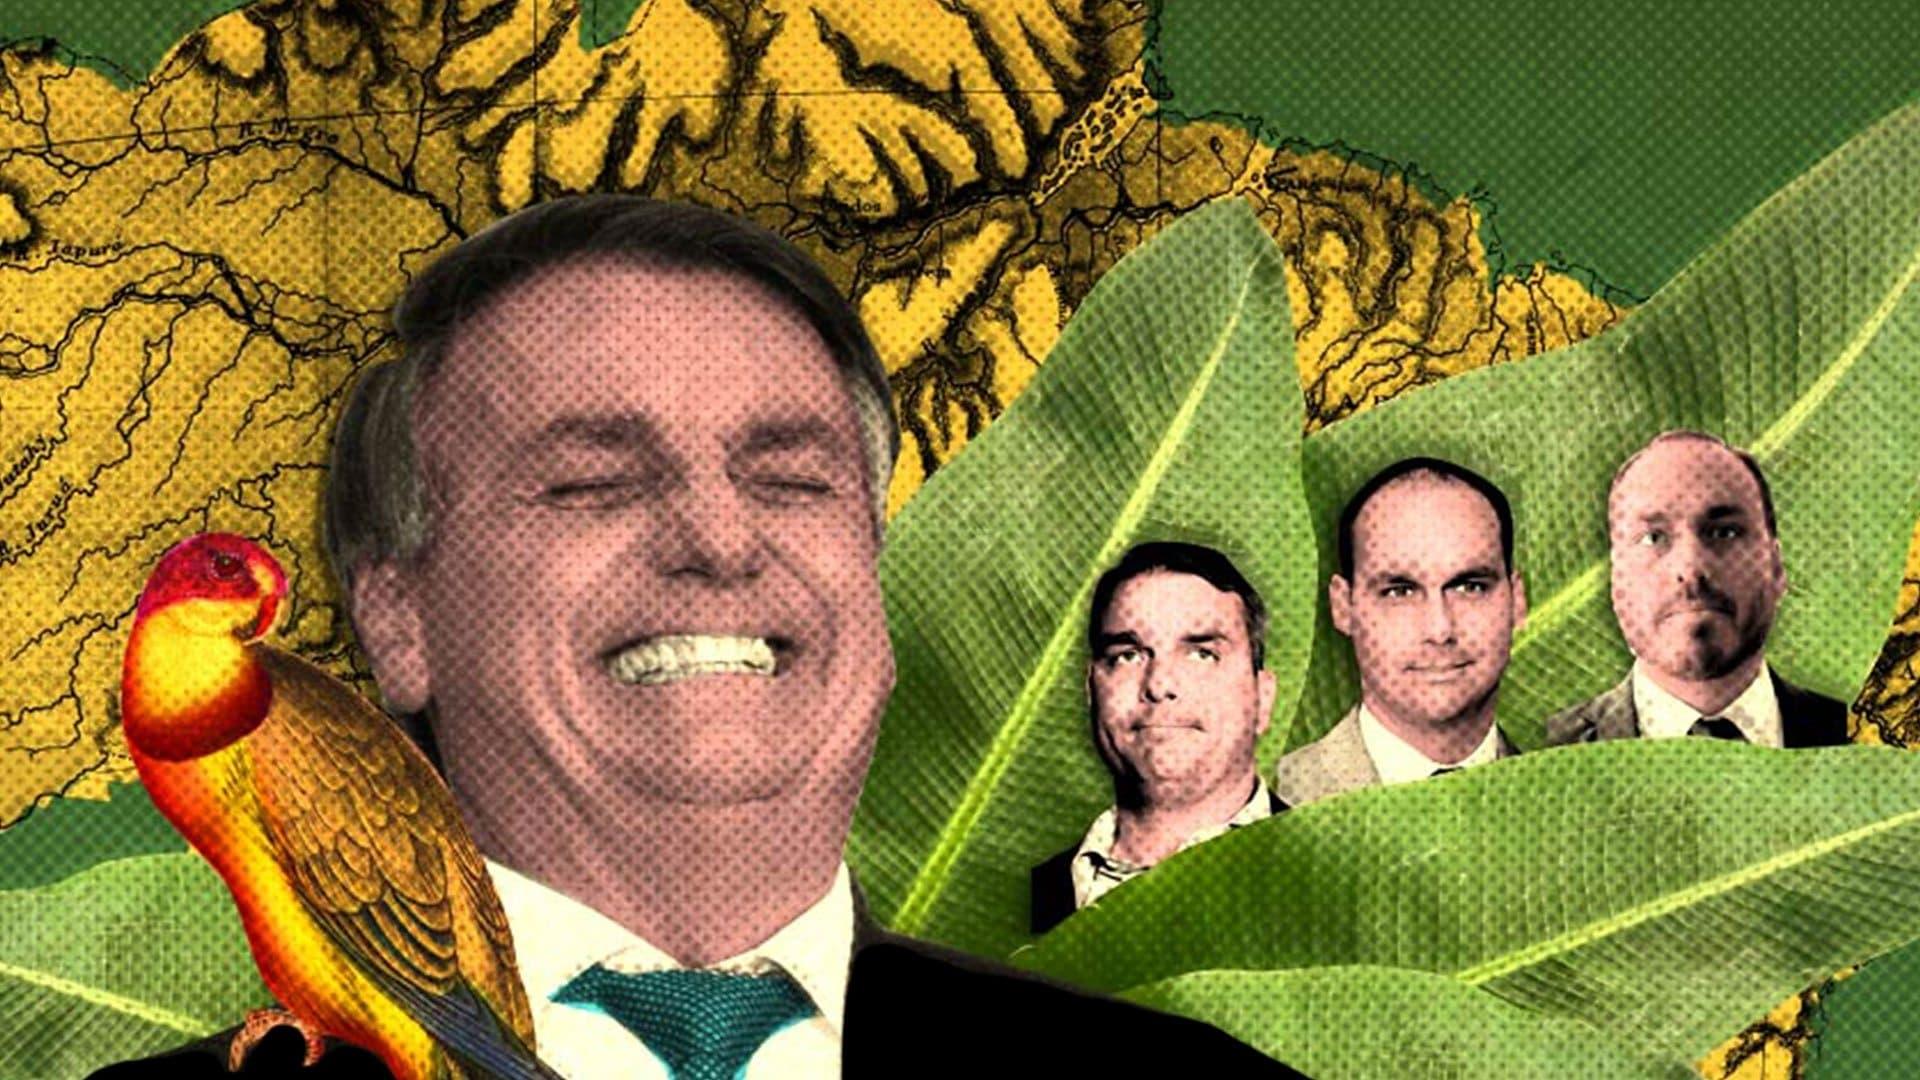 The Boys from Brazil: Rise of the Bolsonaros backdrop